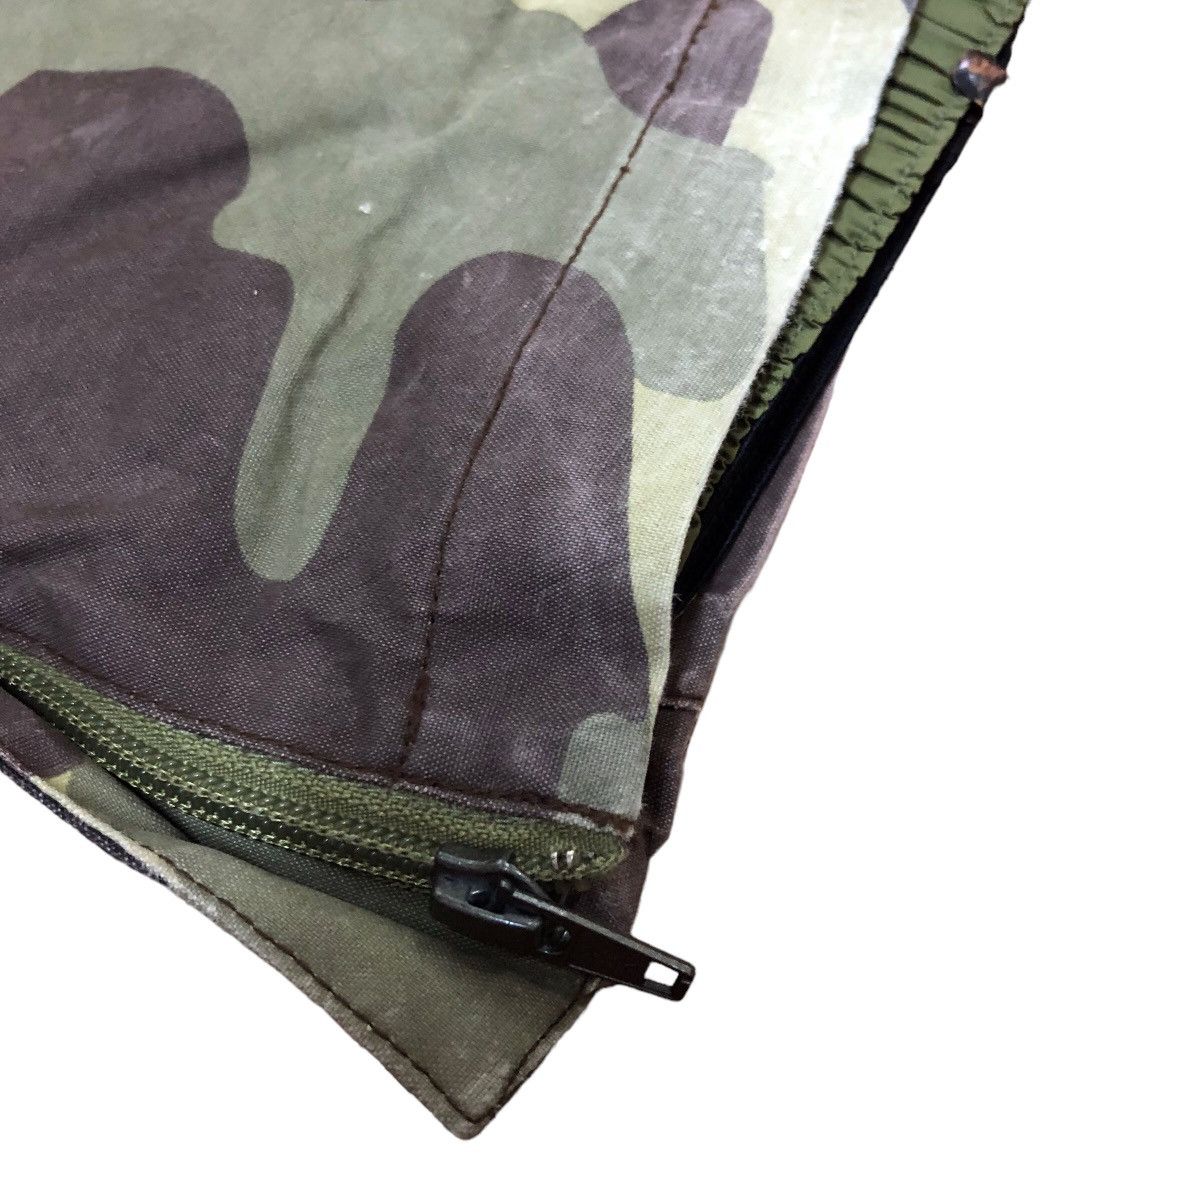 Ronin burton dryride outerwear camouflage snowboard pants - 8